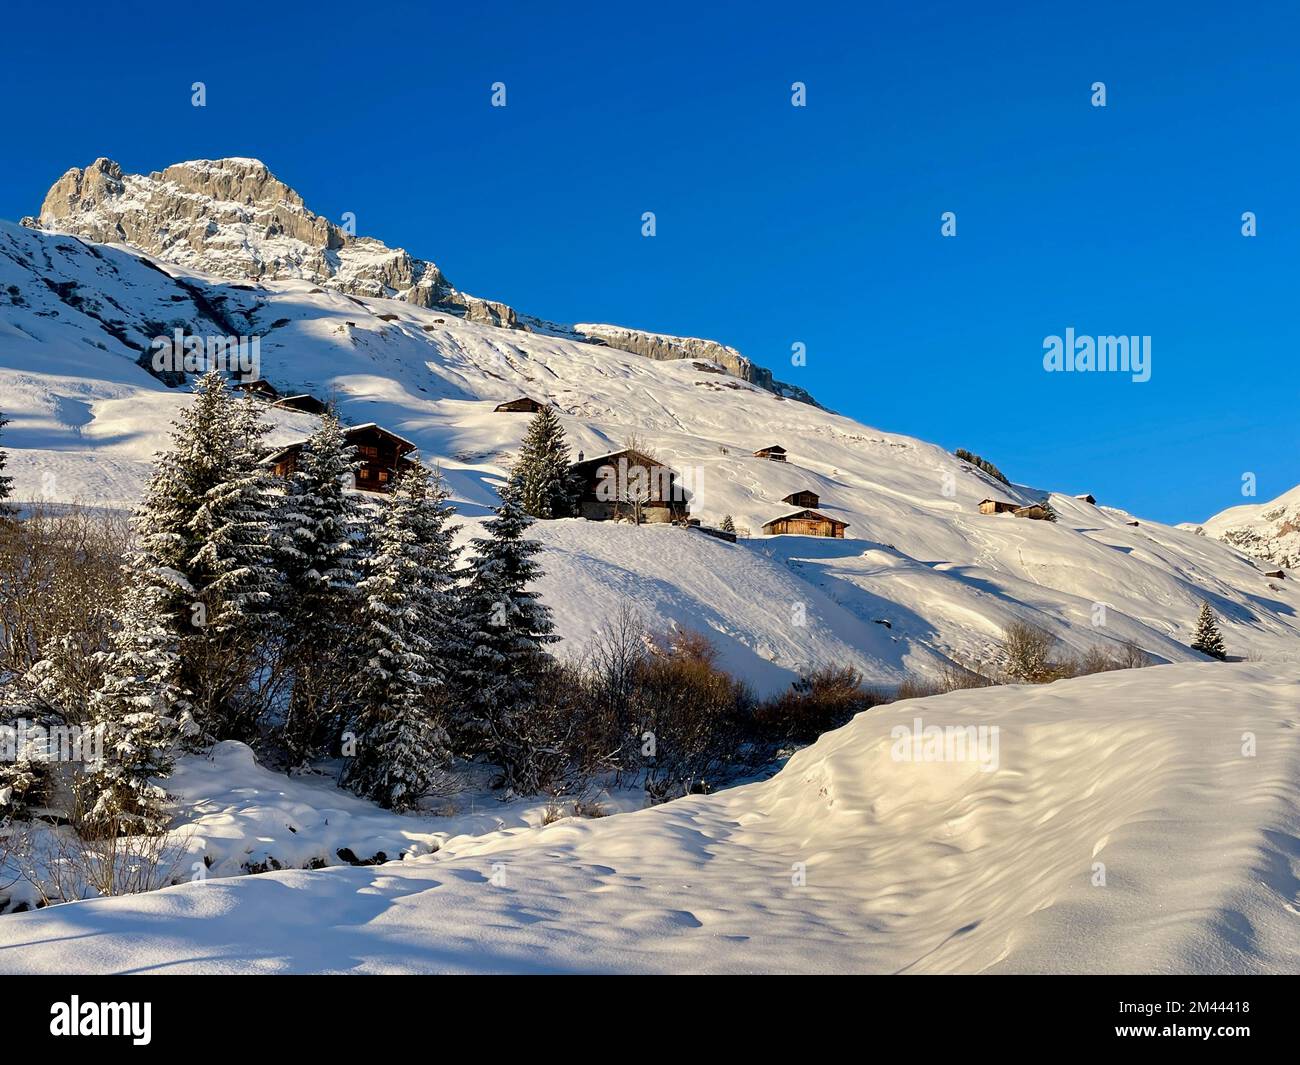 Wonderful winter landscape with traditional wooden mountain huts in Partnun. Praettigau, Graubuenden, Switzerland. Stock Photo